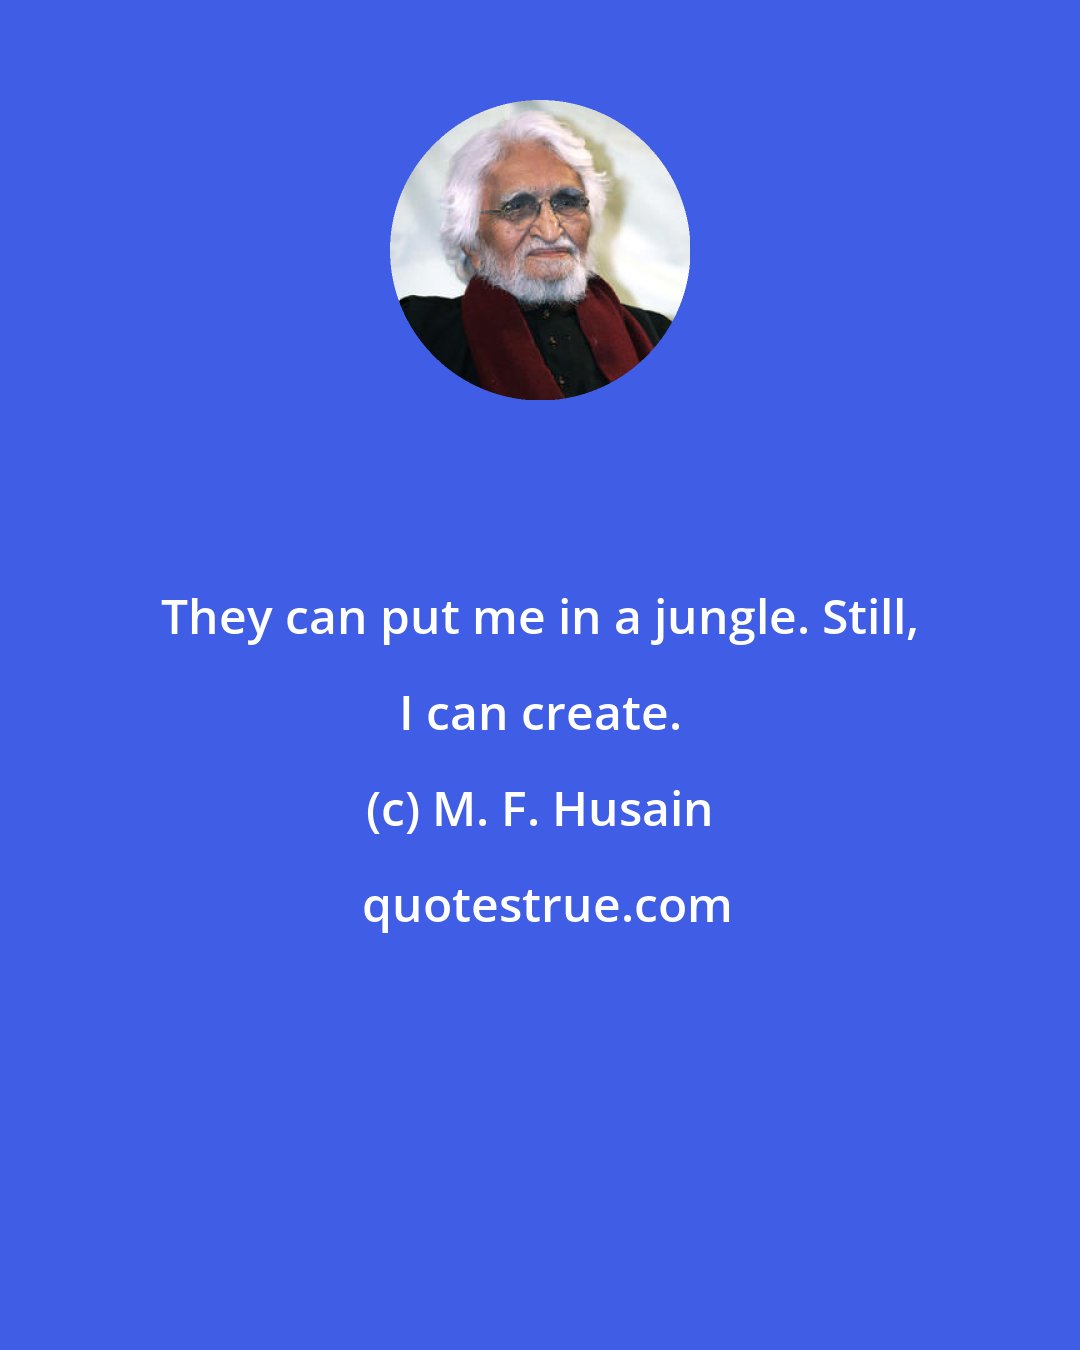 M. F. Husain: They can put me in a jungle. Still, I can create.